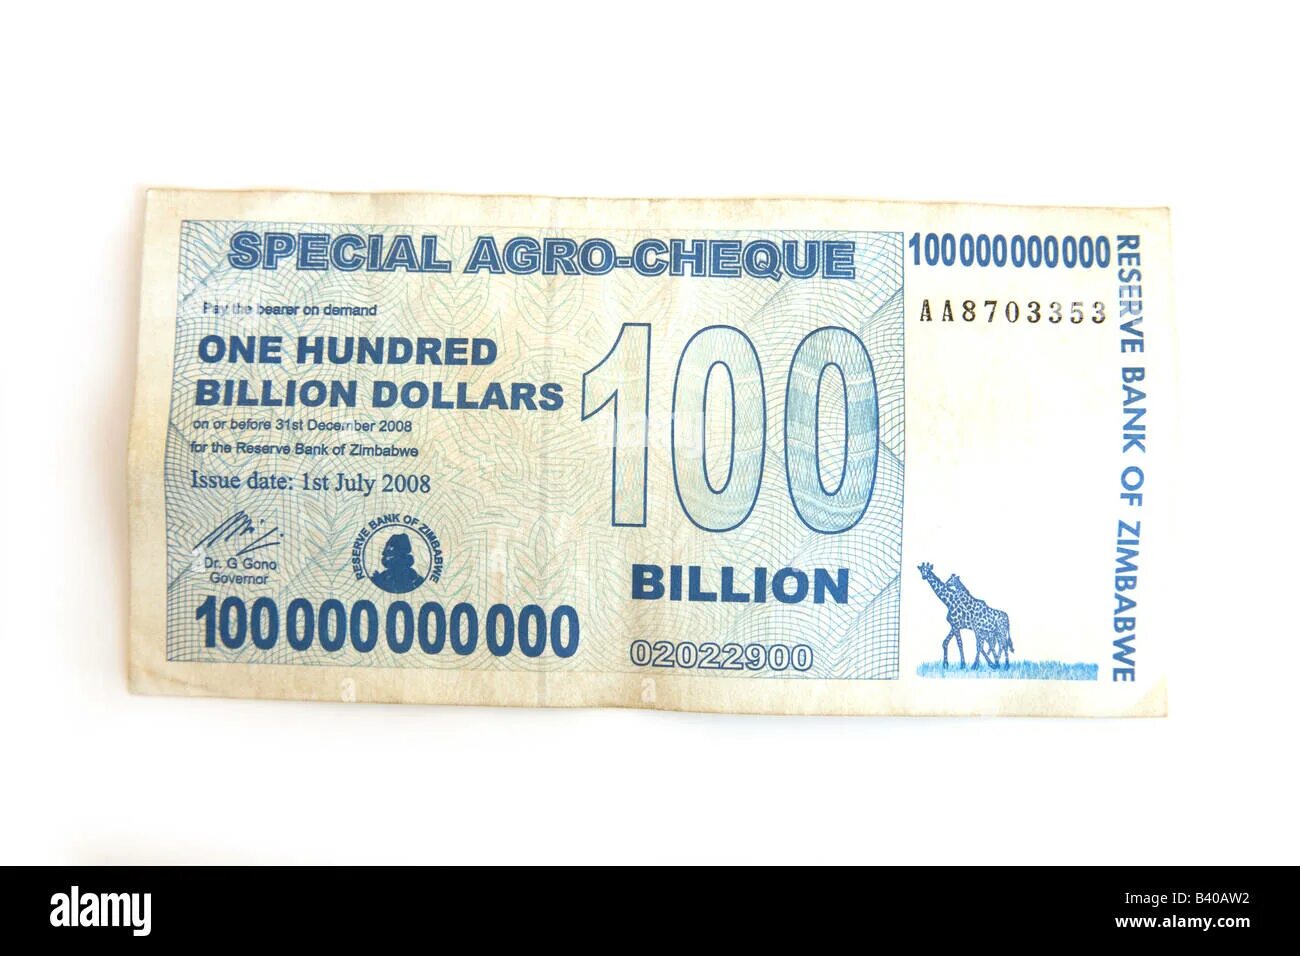 Зимбабвийский доллар 100 триллионов. 100000000000 Долларов. 100 Миллиардов зимбабвийских долларов. 100 Млрд долларов Зимбабве.